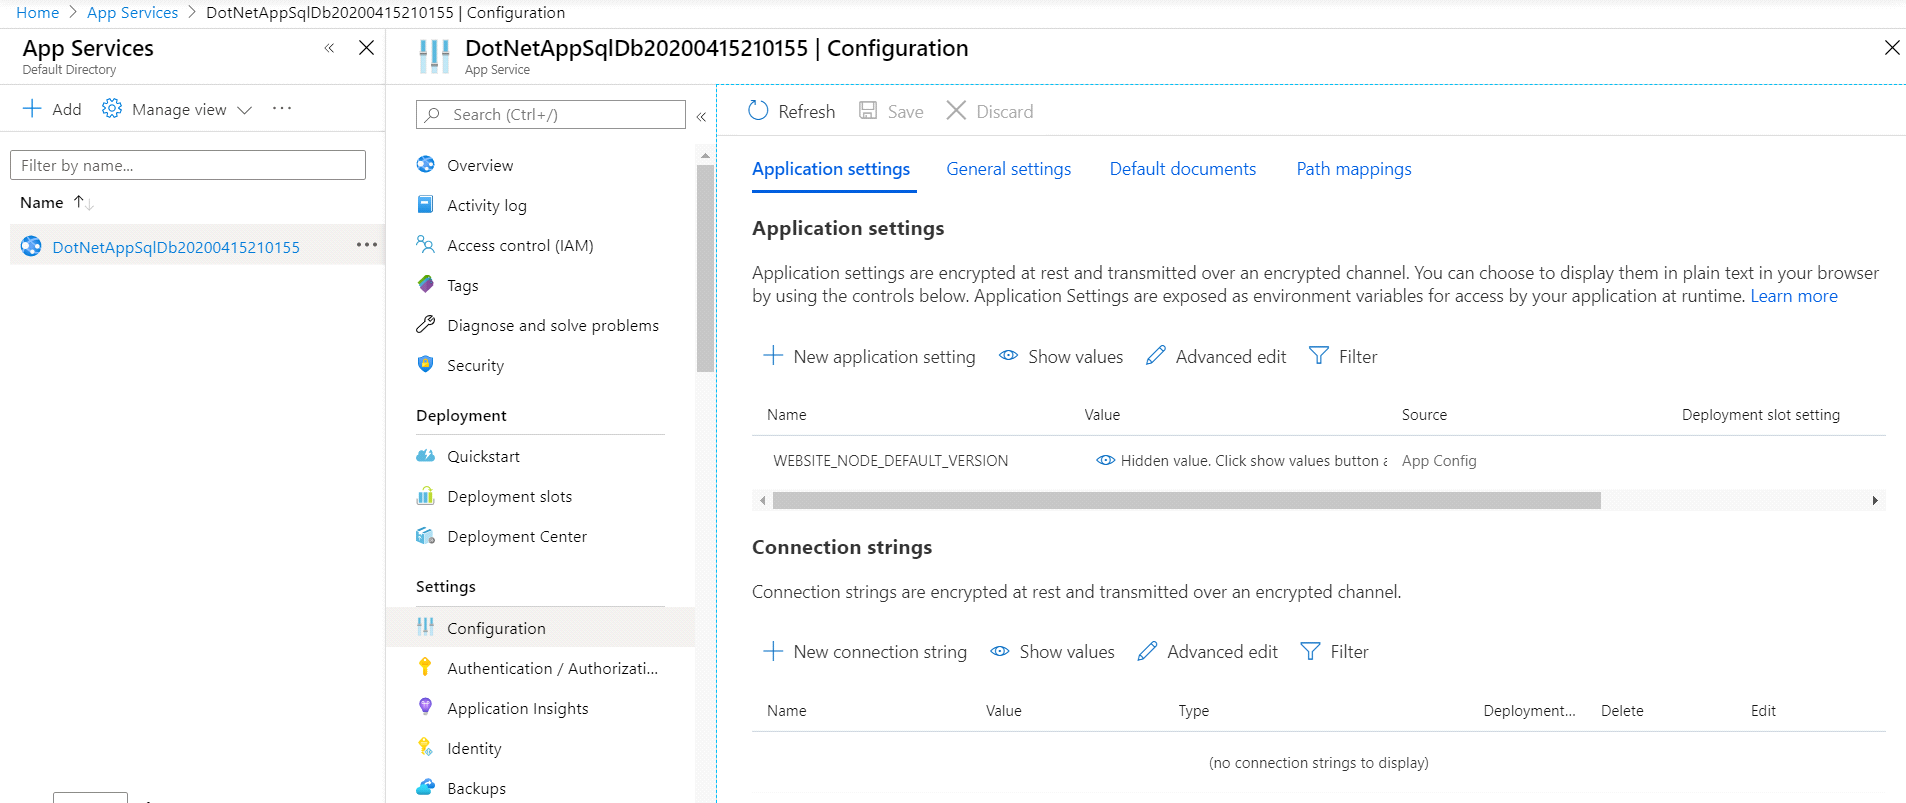 Configure Azure SQL Database Connection string through App Services in portal